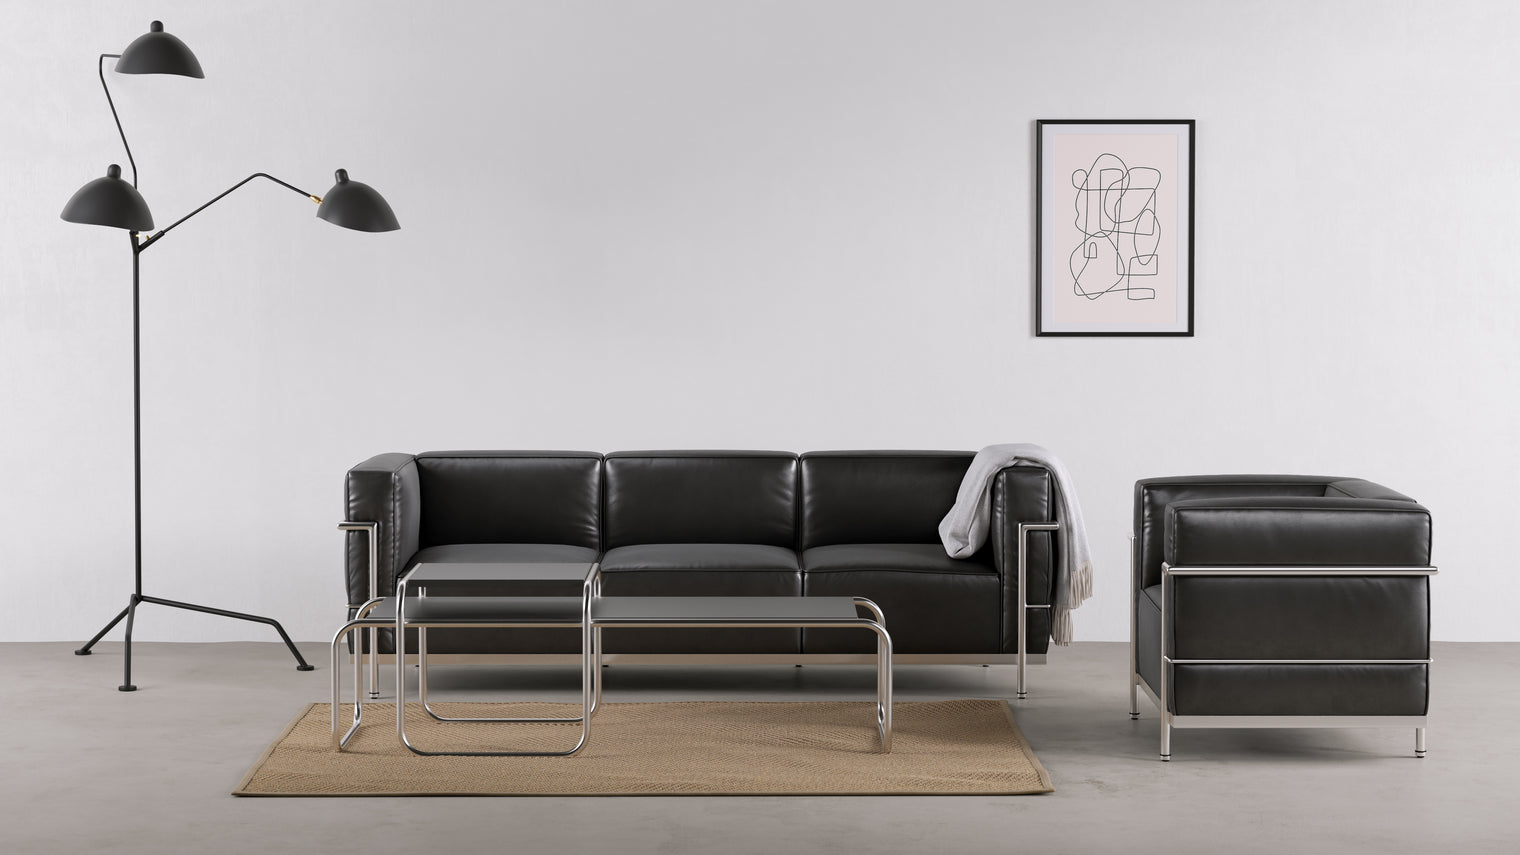 Corbusier - Corbusier Grand Modele Three Seater Sofa, Midnight Black Premium Leather